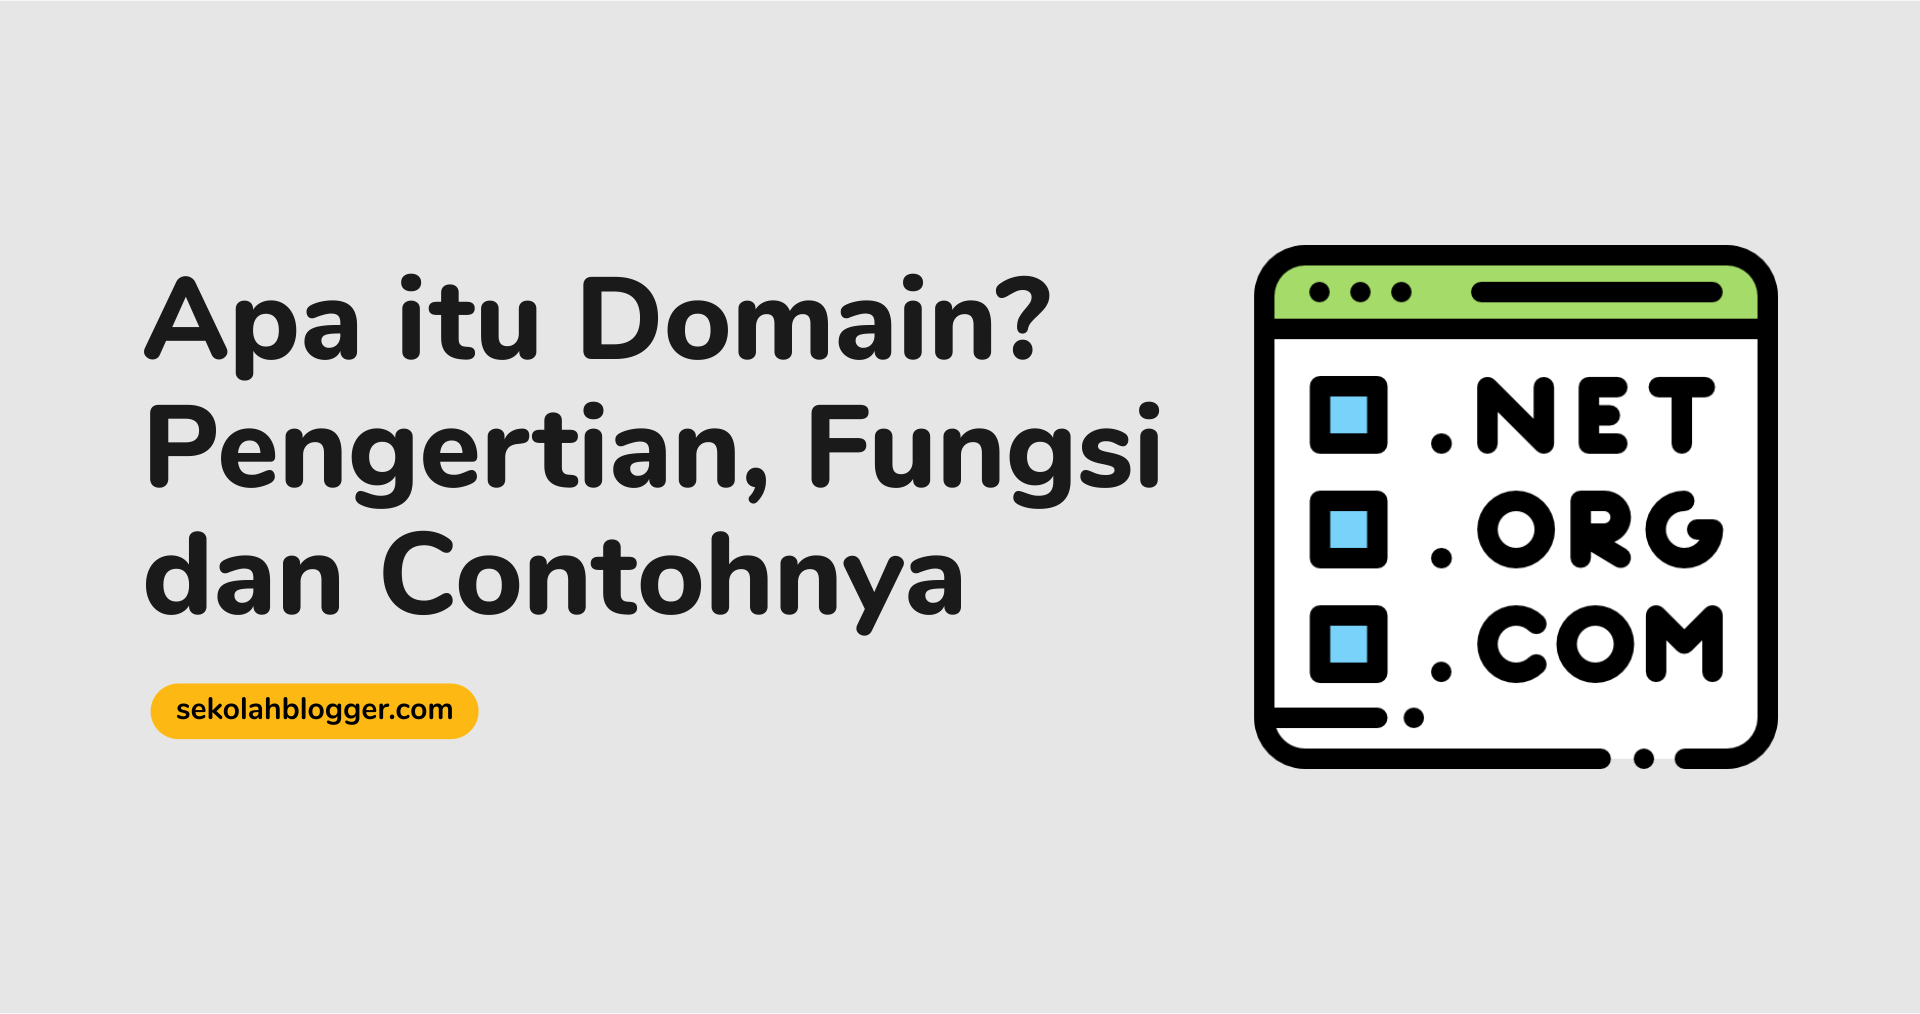 apa itu domain, pengertian domain